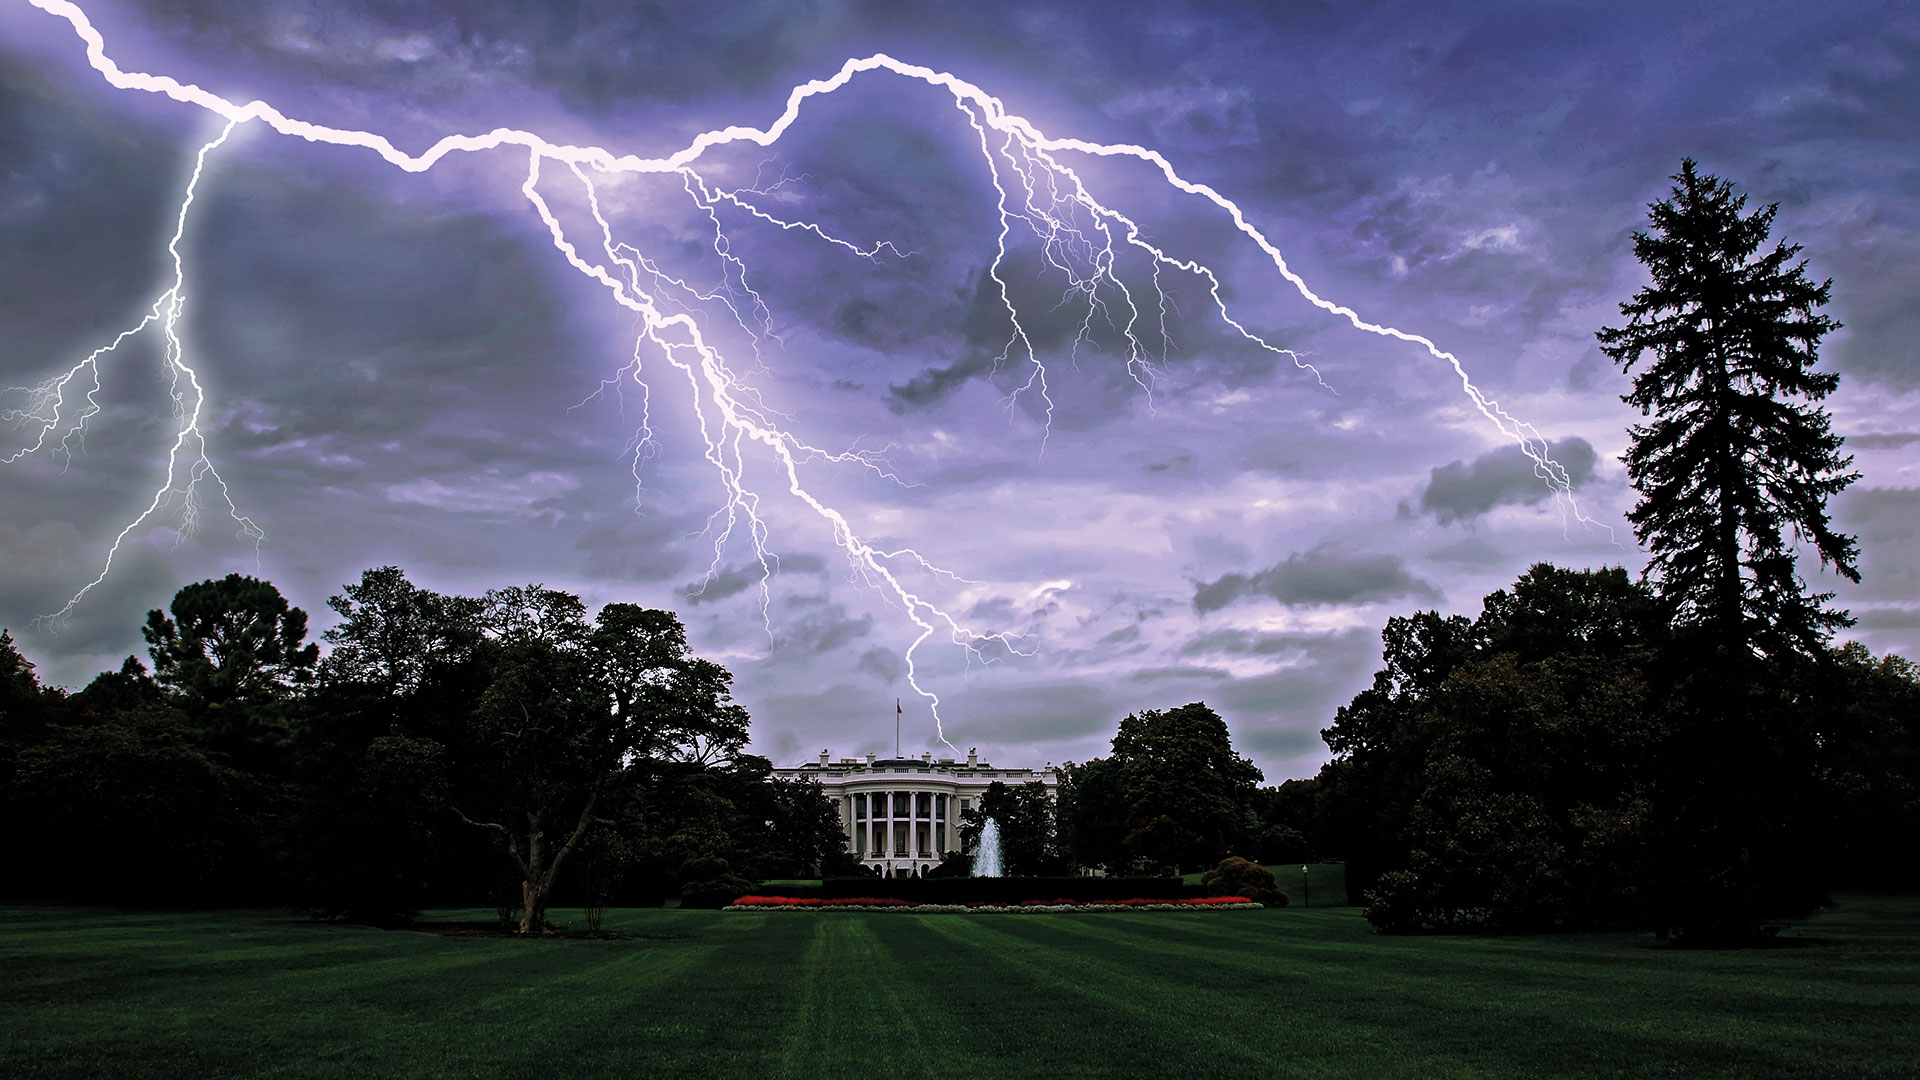 Lighting over The White House, Washington